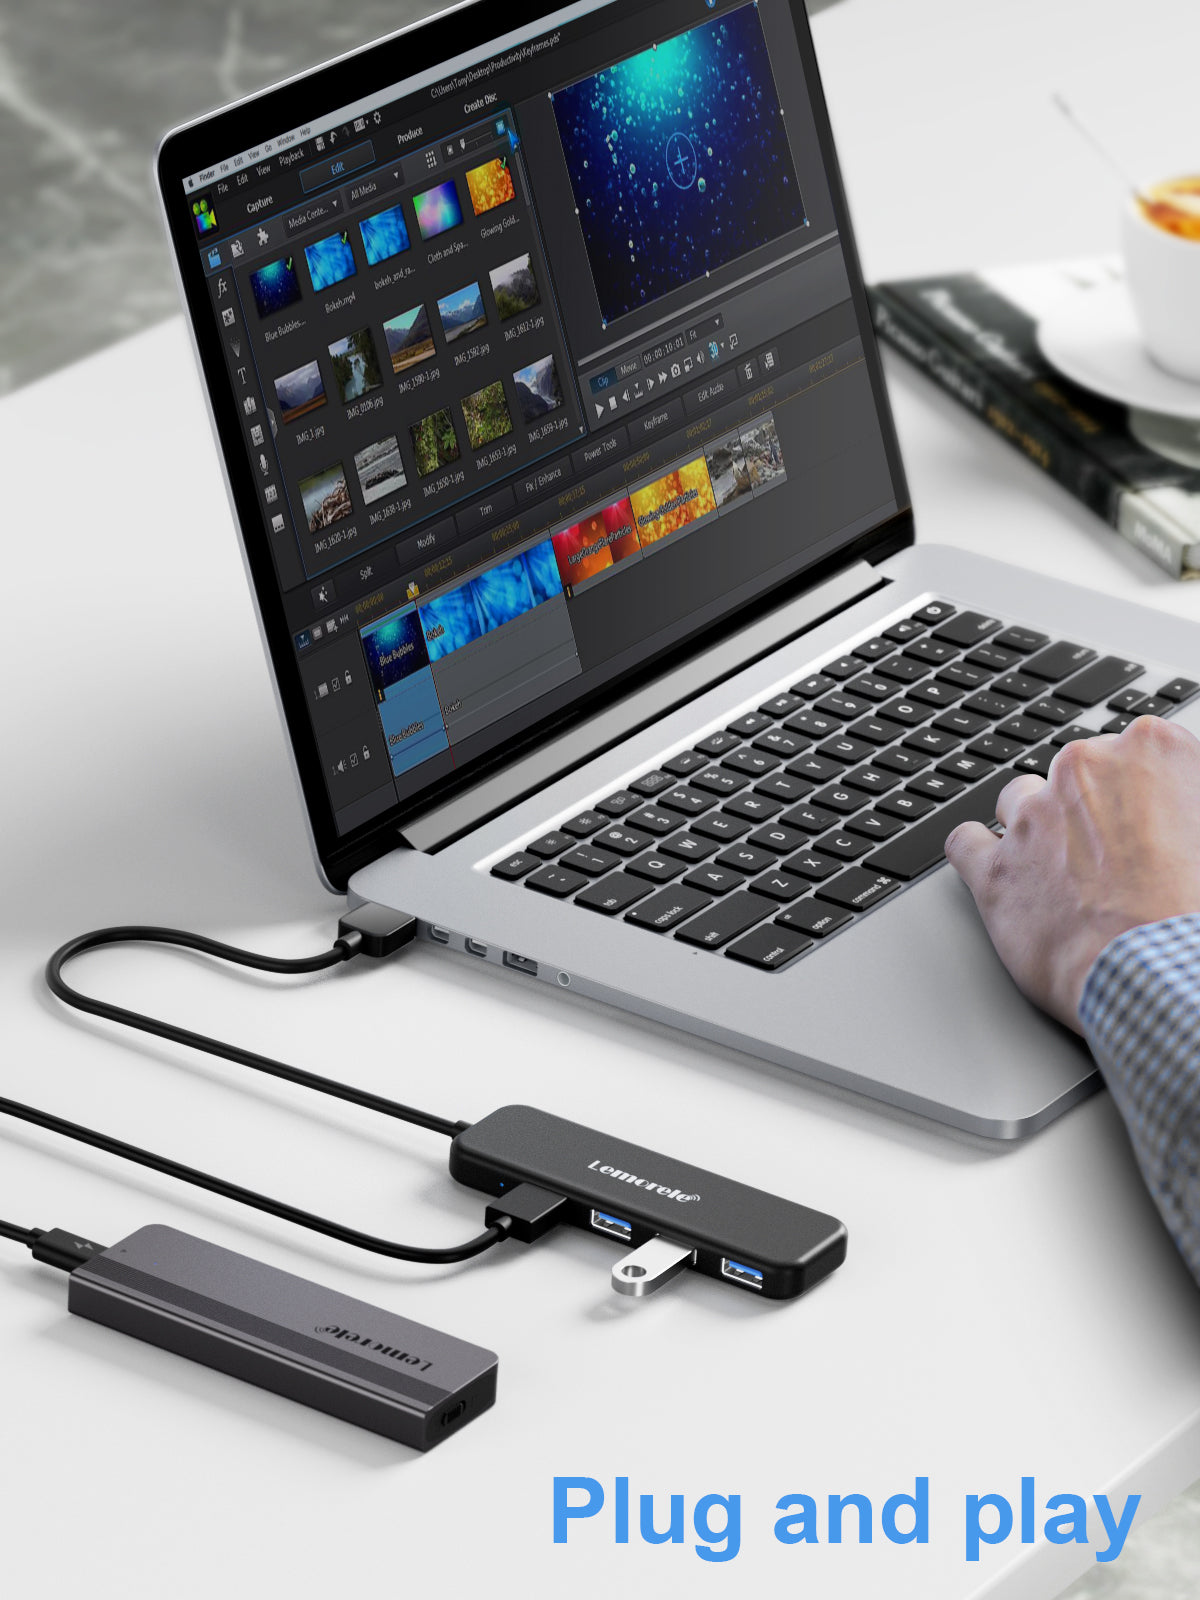 HUB USB Lemorele per laptop USB 4 IN 1【#TC55】 